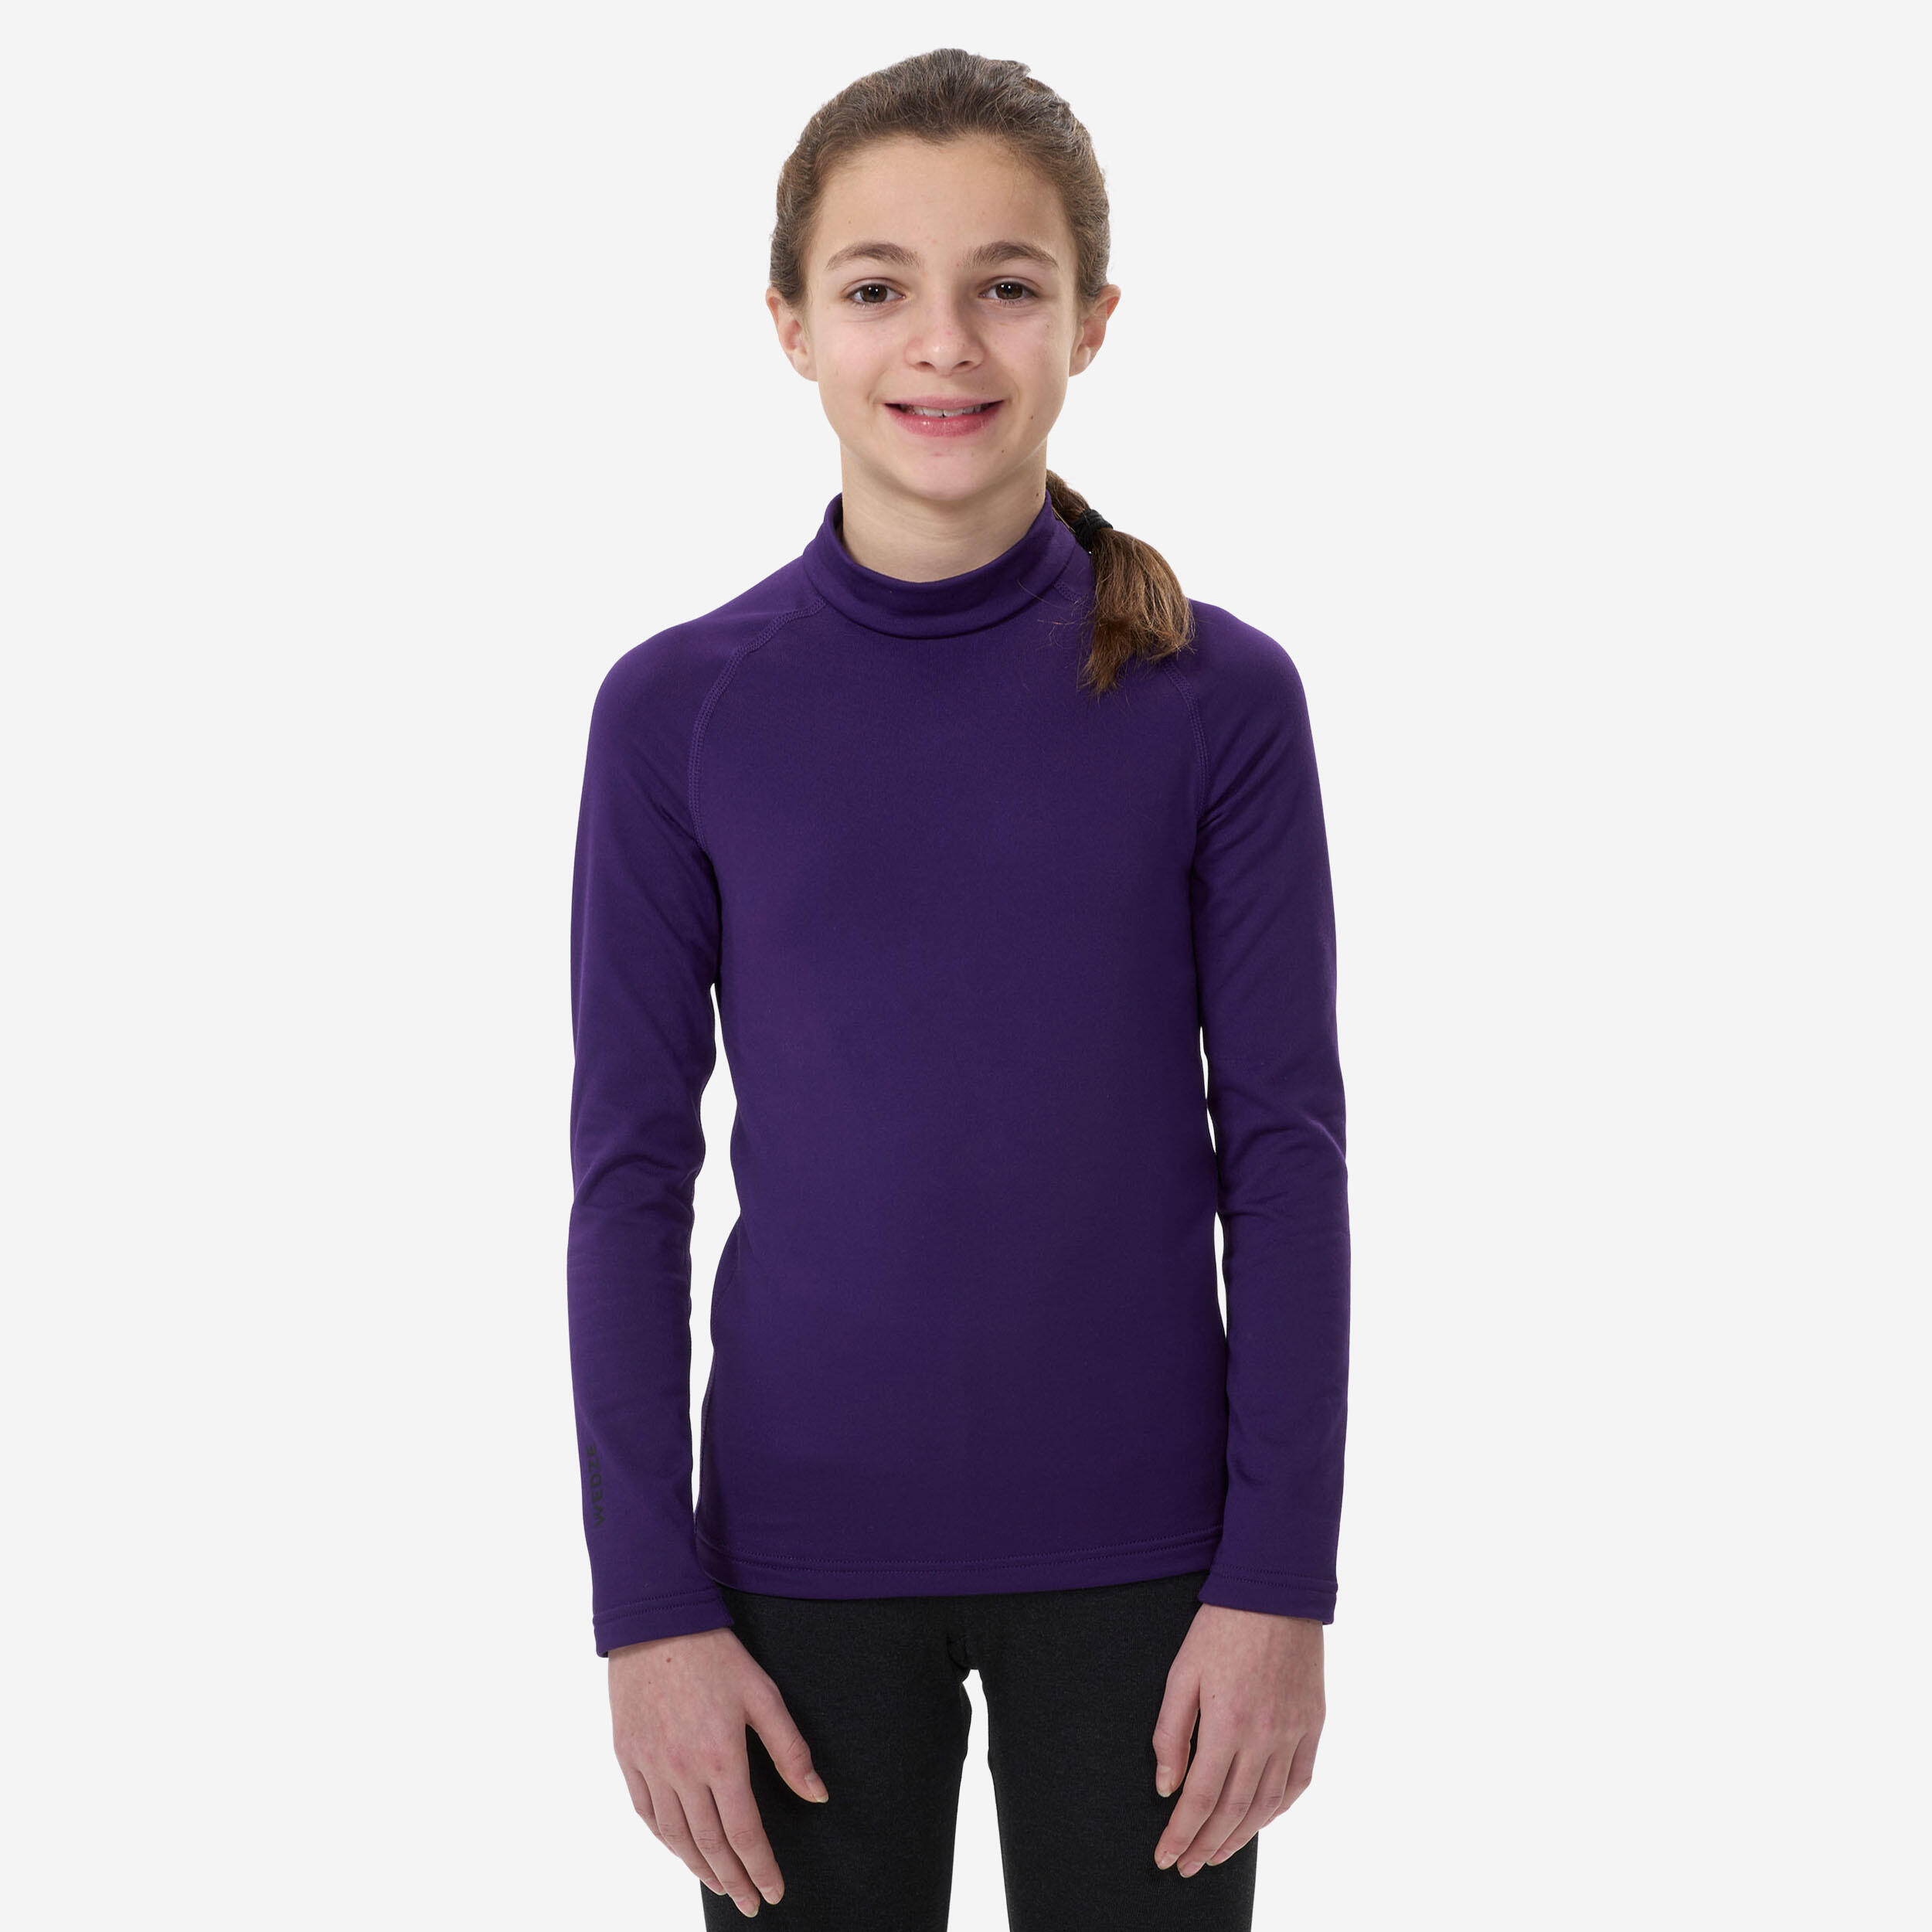 WEDZE Children’s thermal ski base layer top 500 - purple 